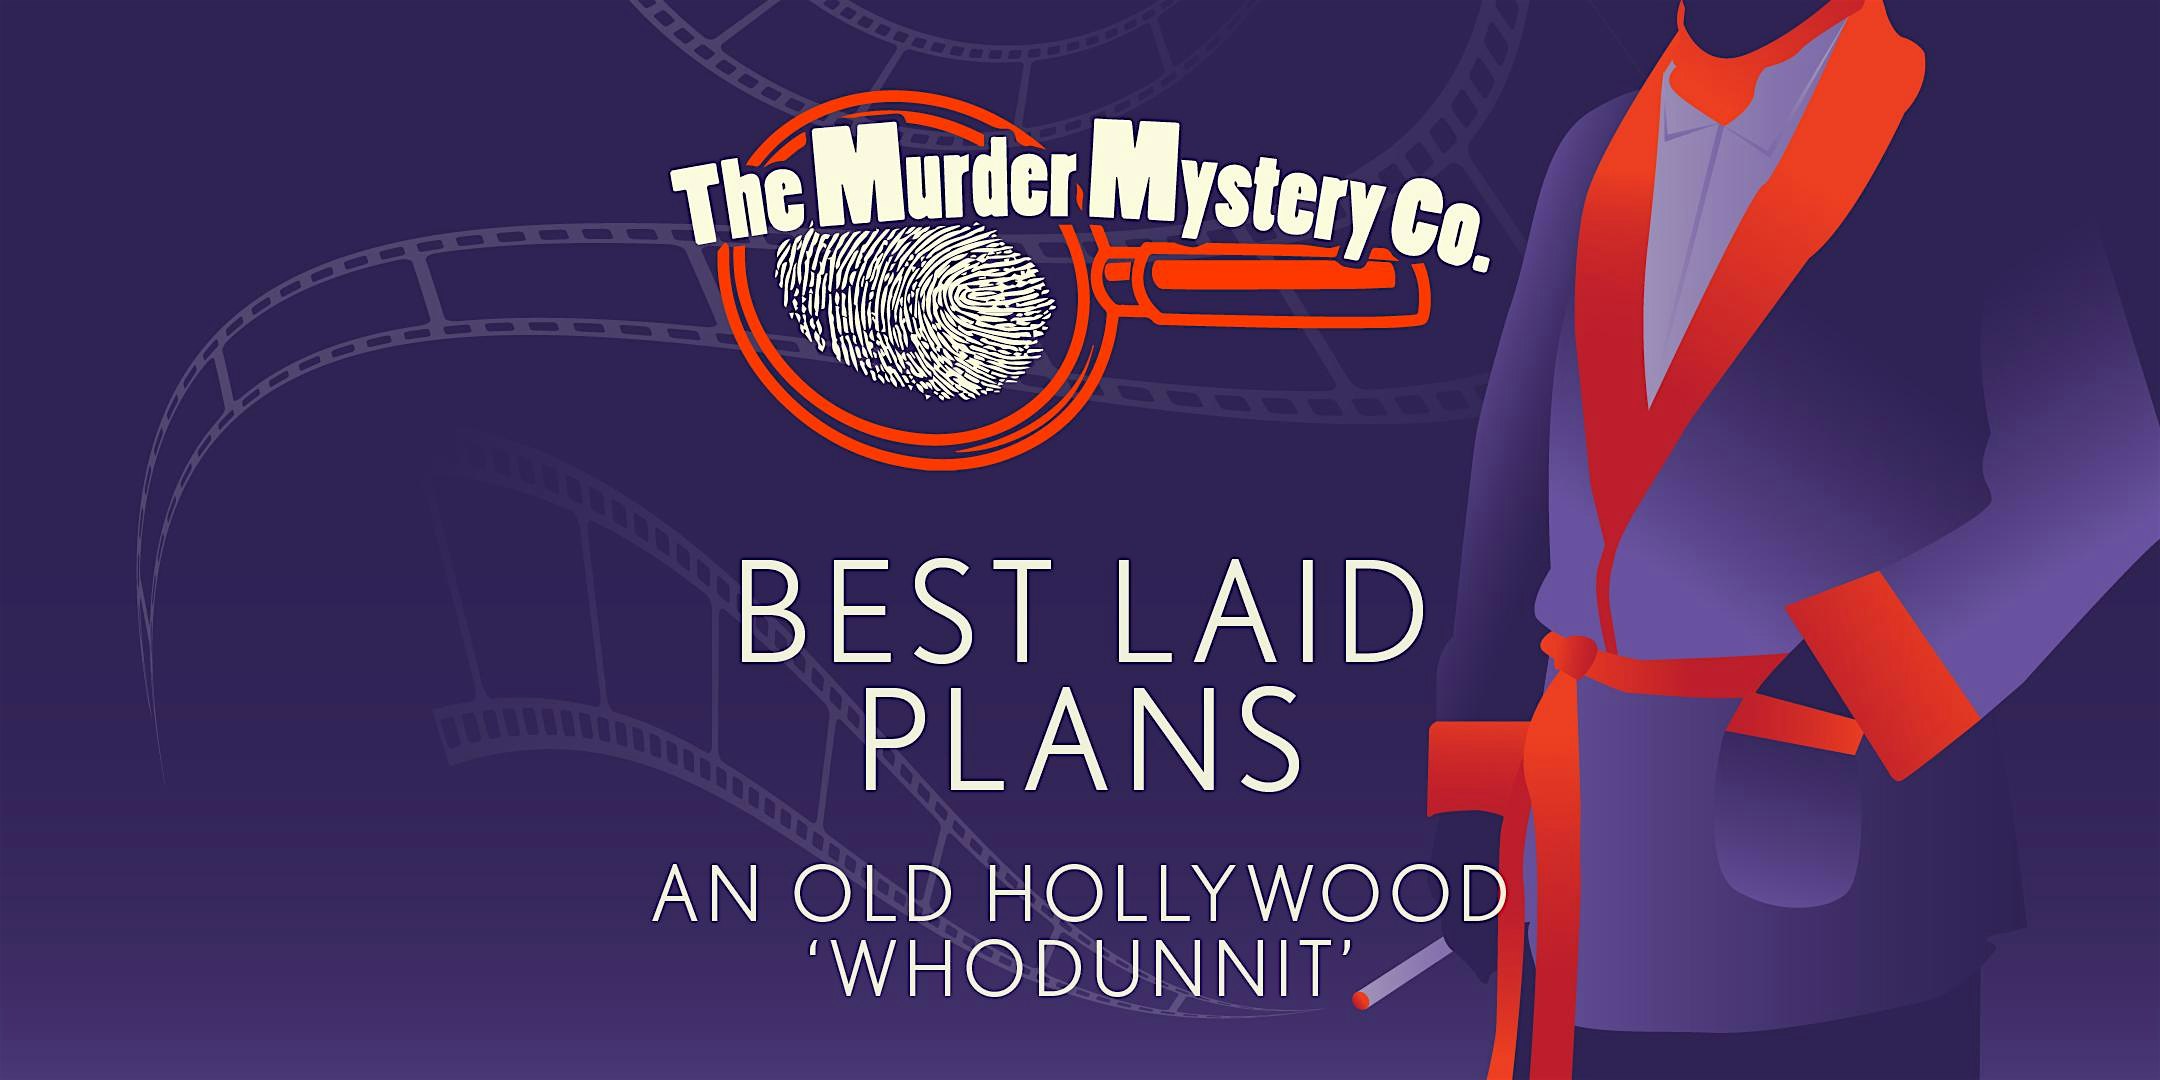 Murder Mystery Dinner Theater Show in Nashville: Best Laid Plans